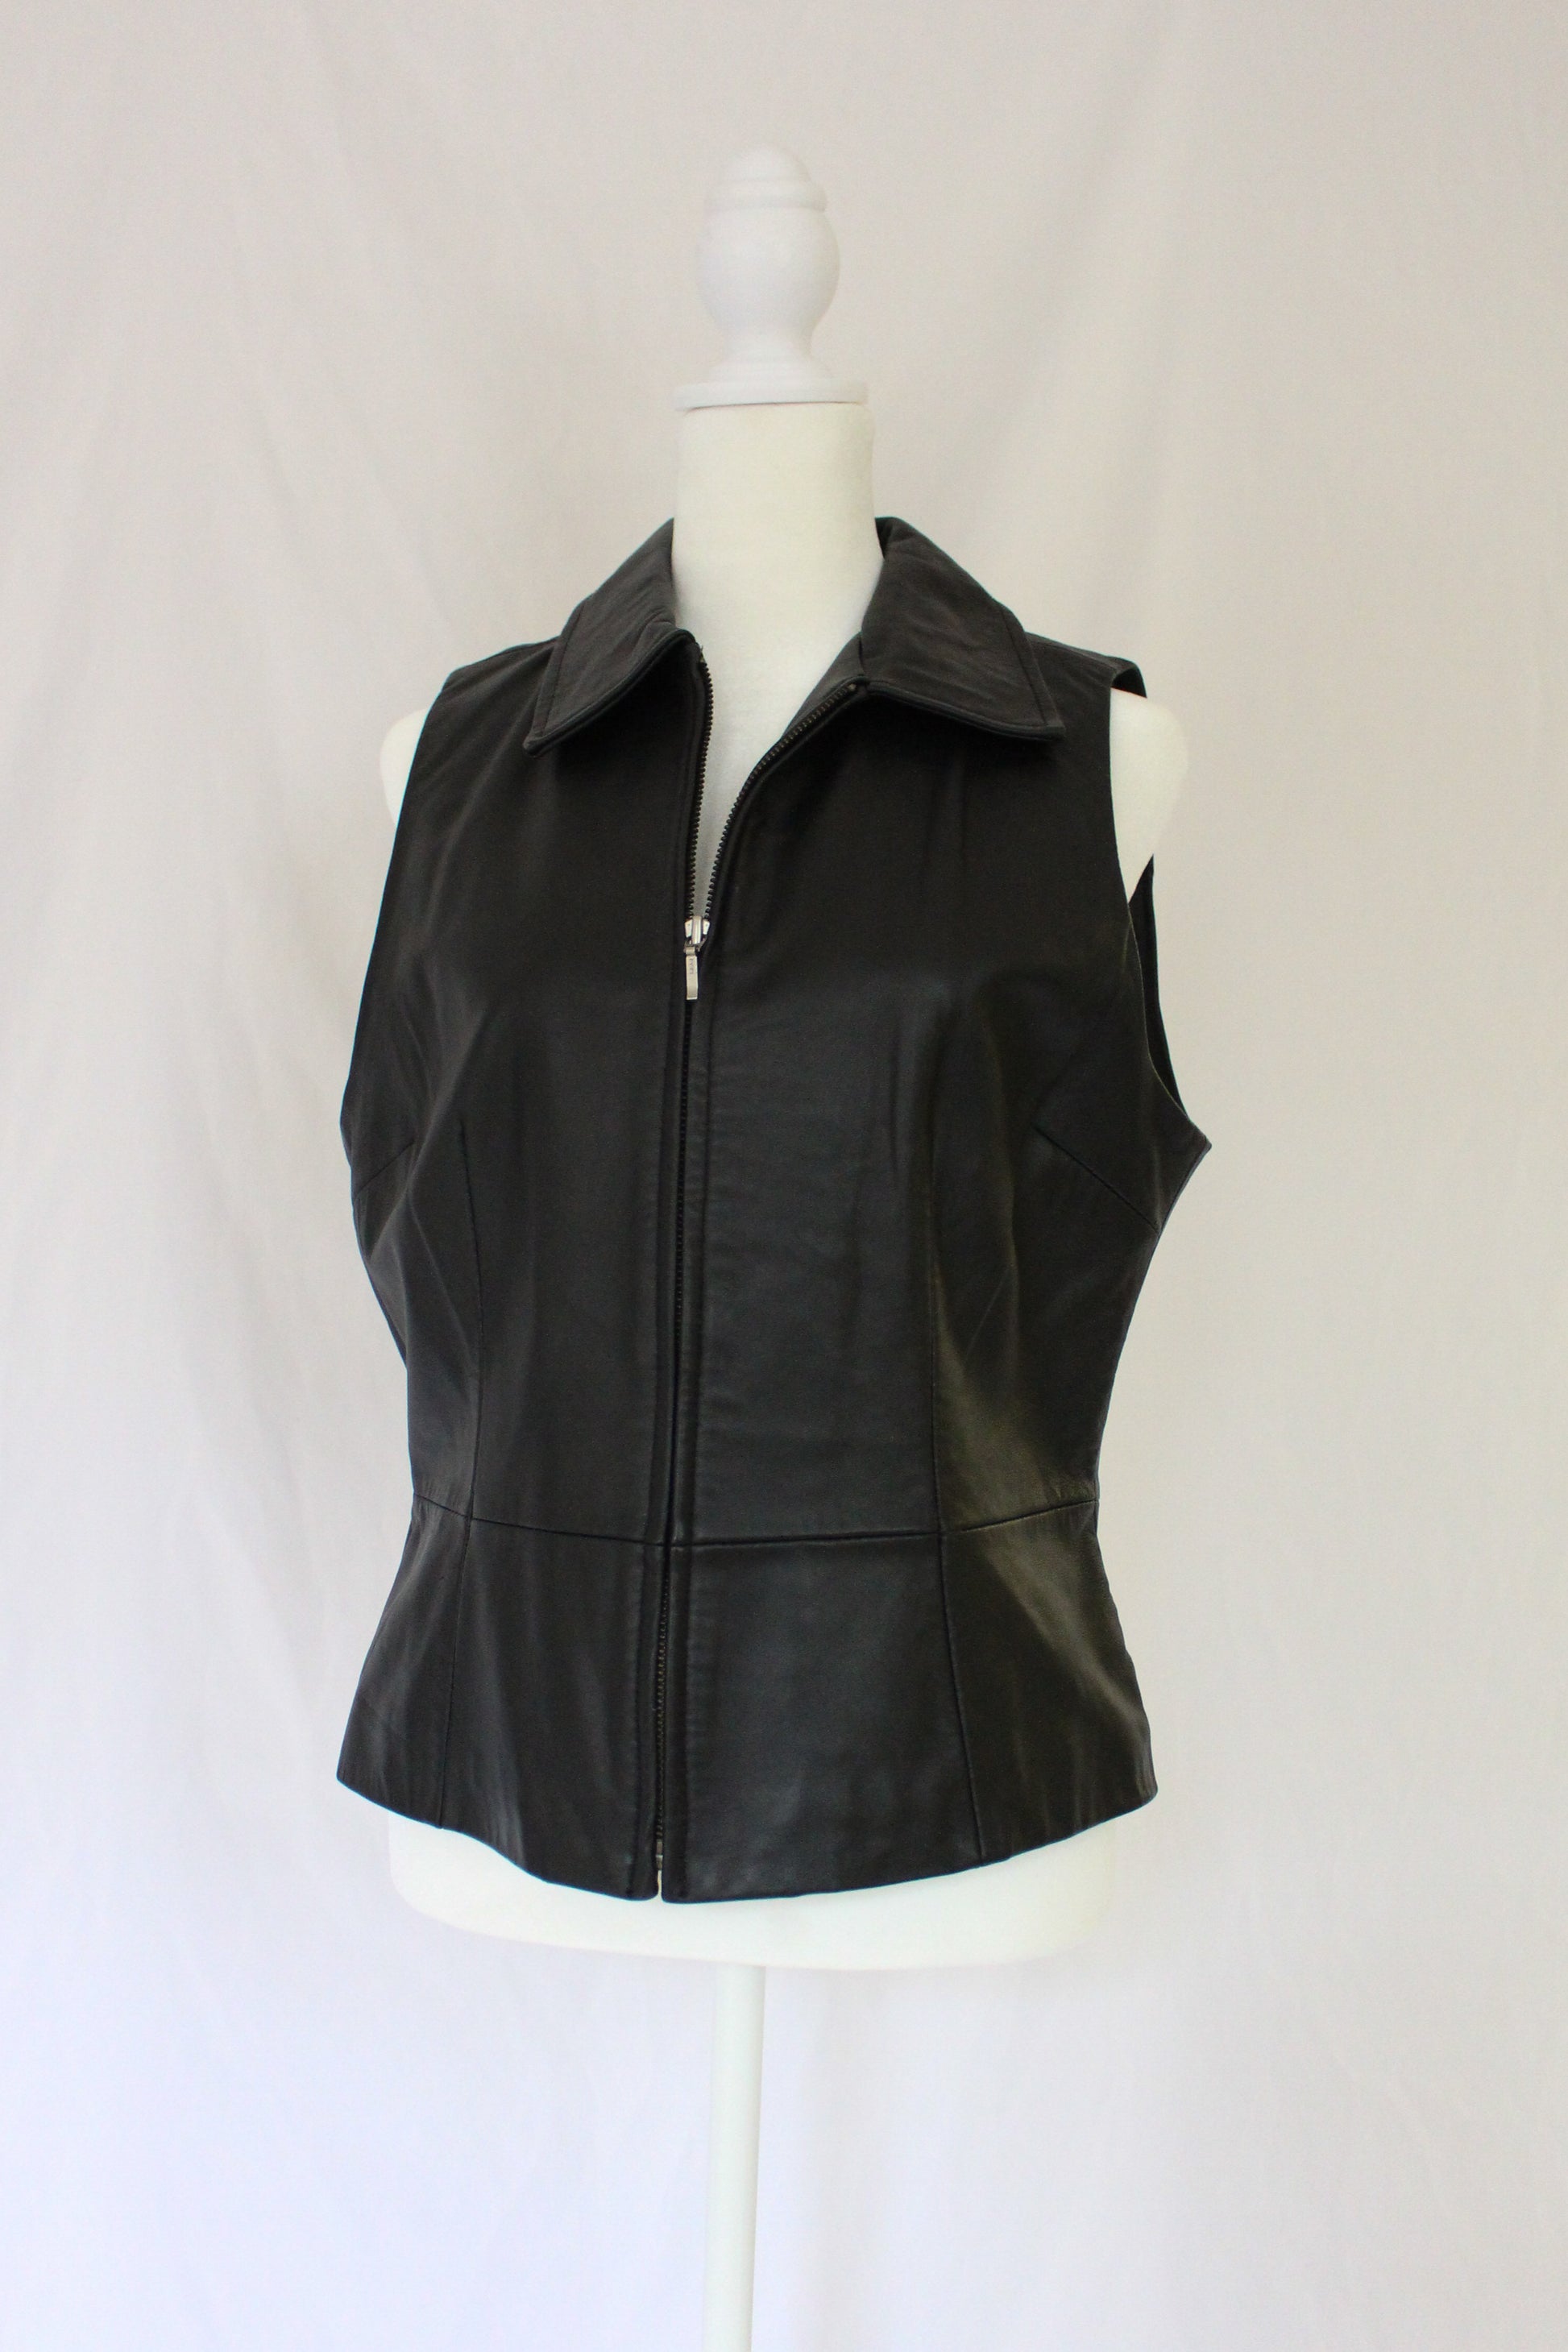 zipped up black leather vest